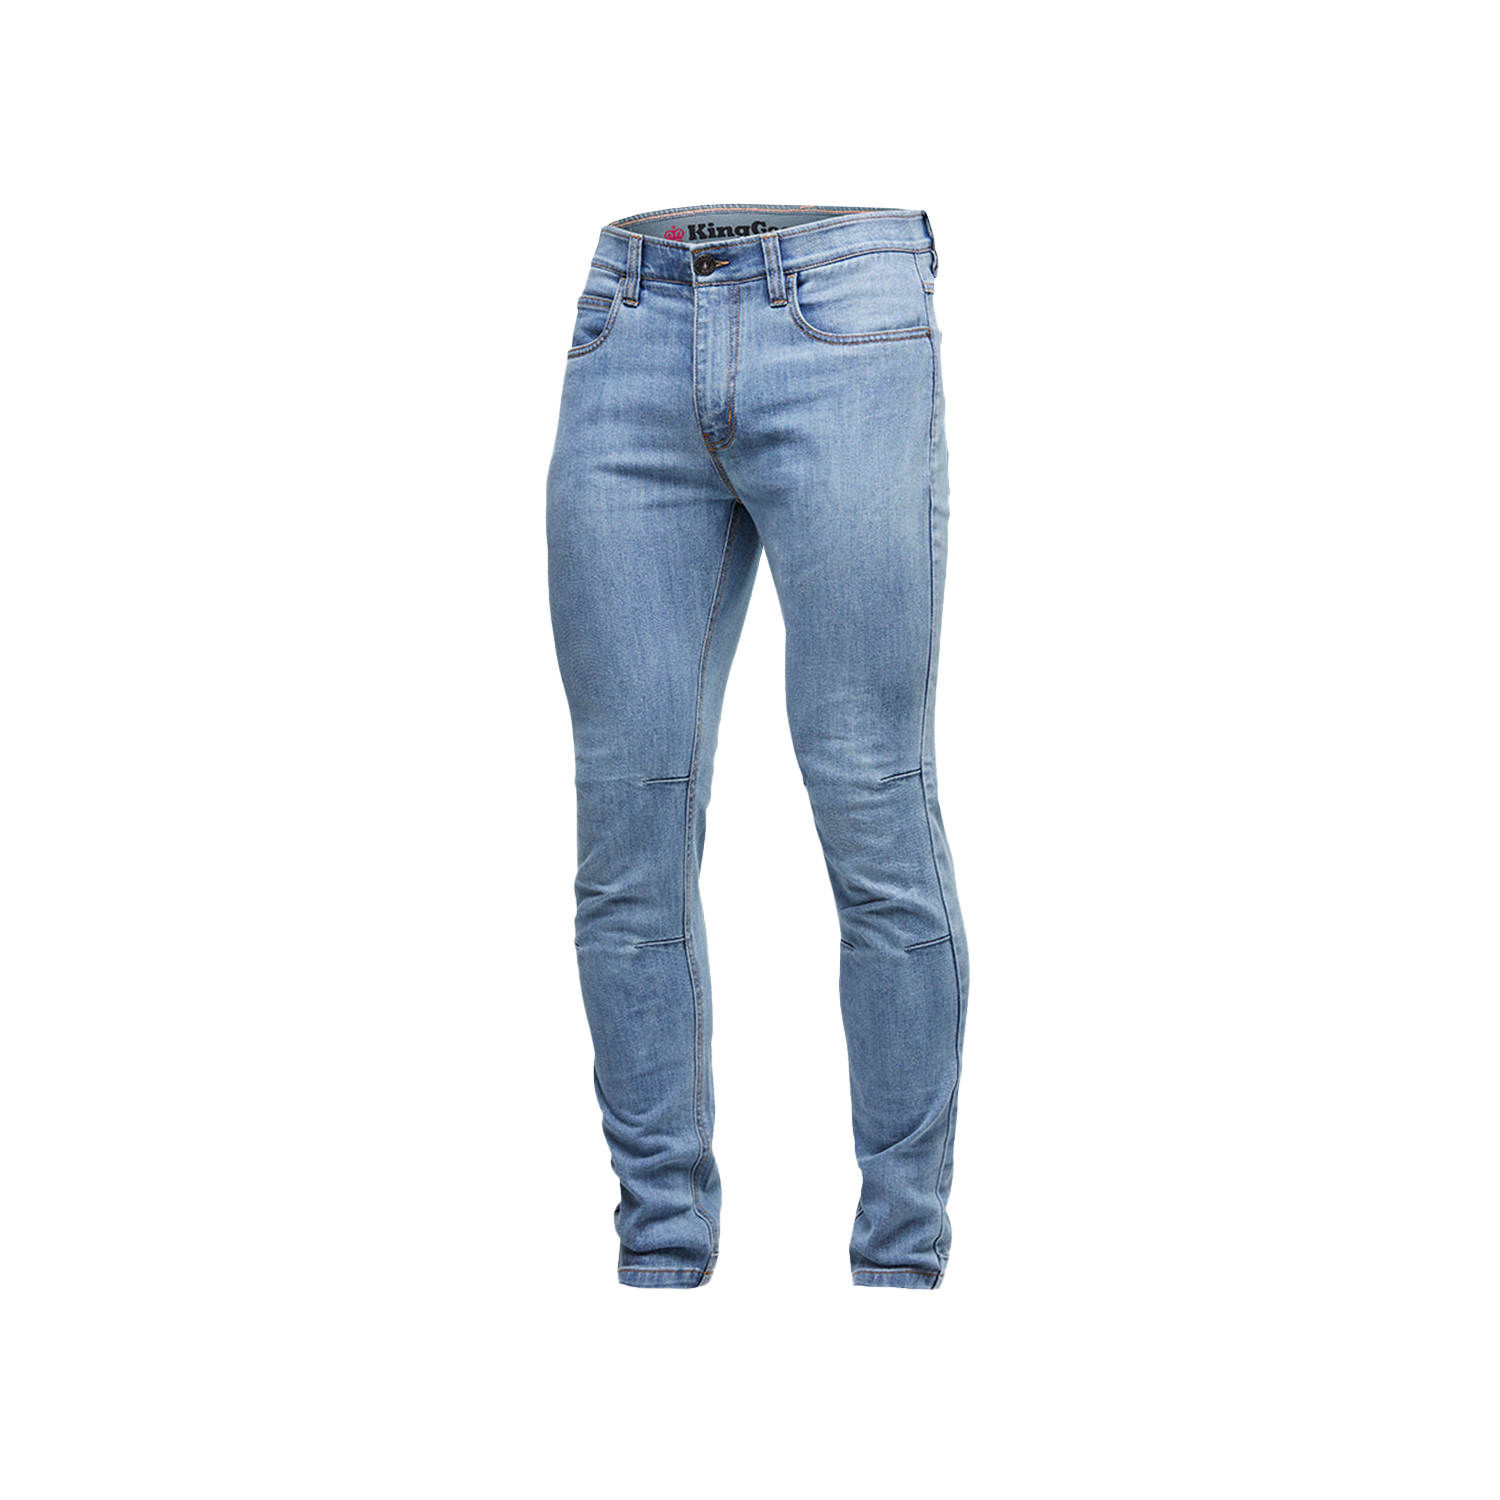 KingGee Men's Urban Coolmax Denim Jeans - Vintage - Totally Workwear